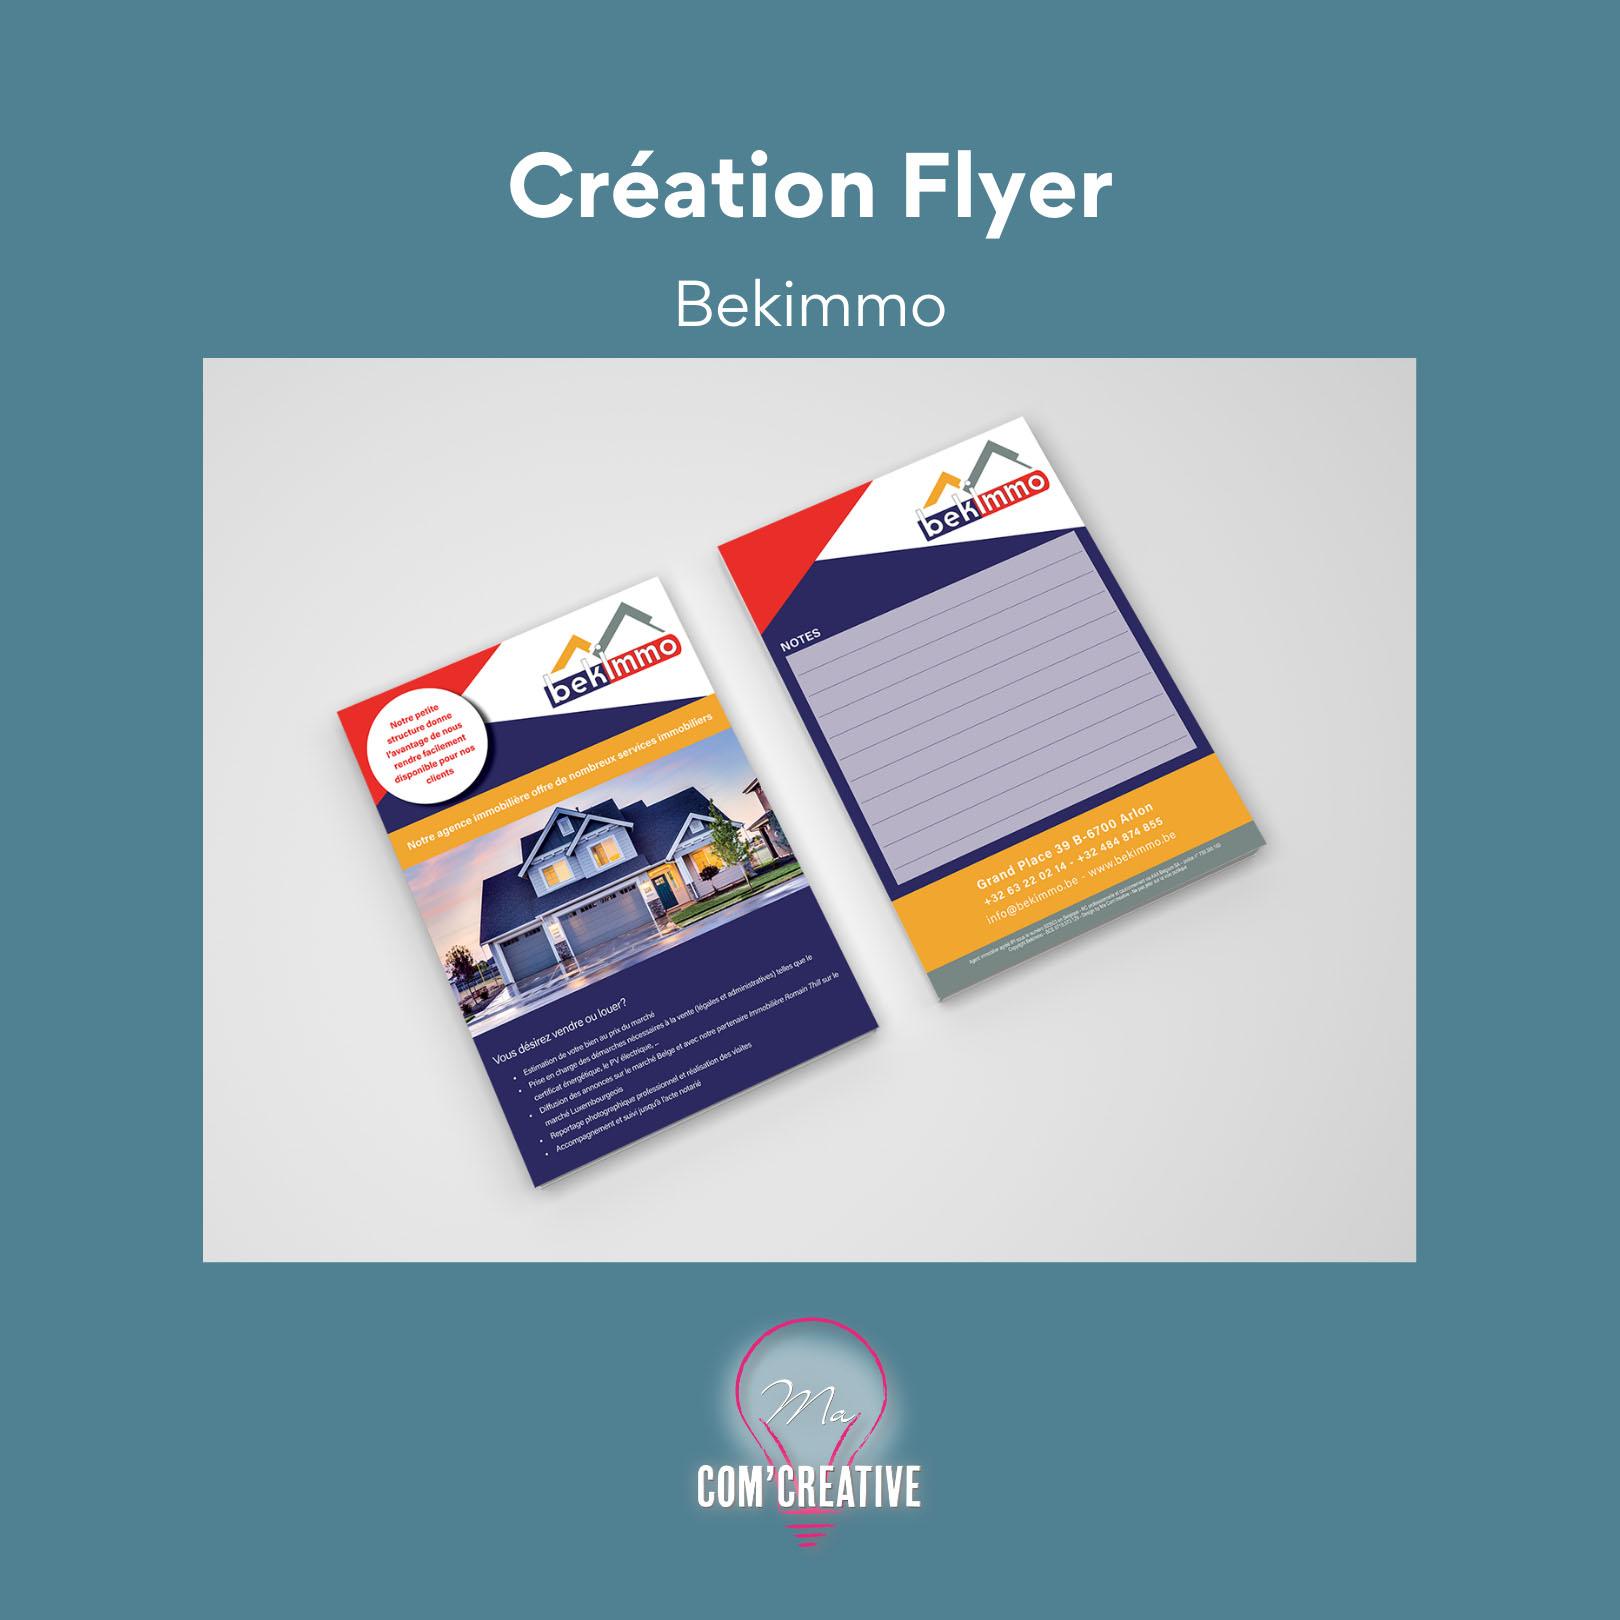 Creation flyer - Bekimmo - Ma Com'Creative